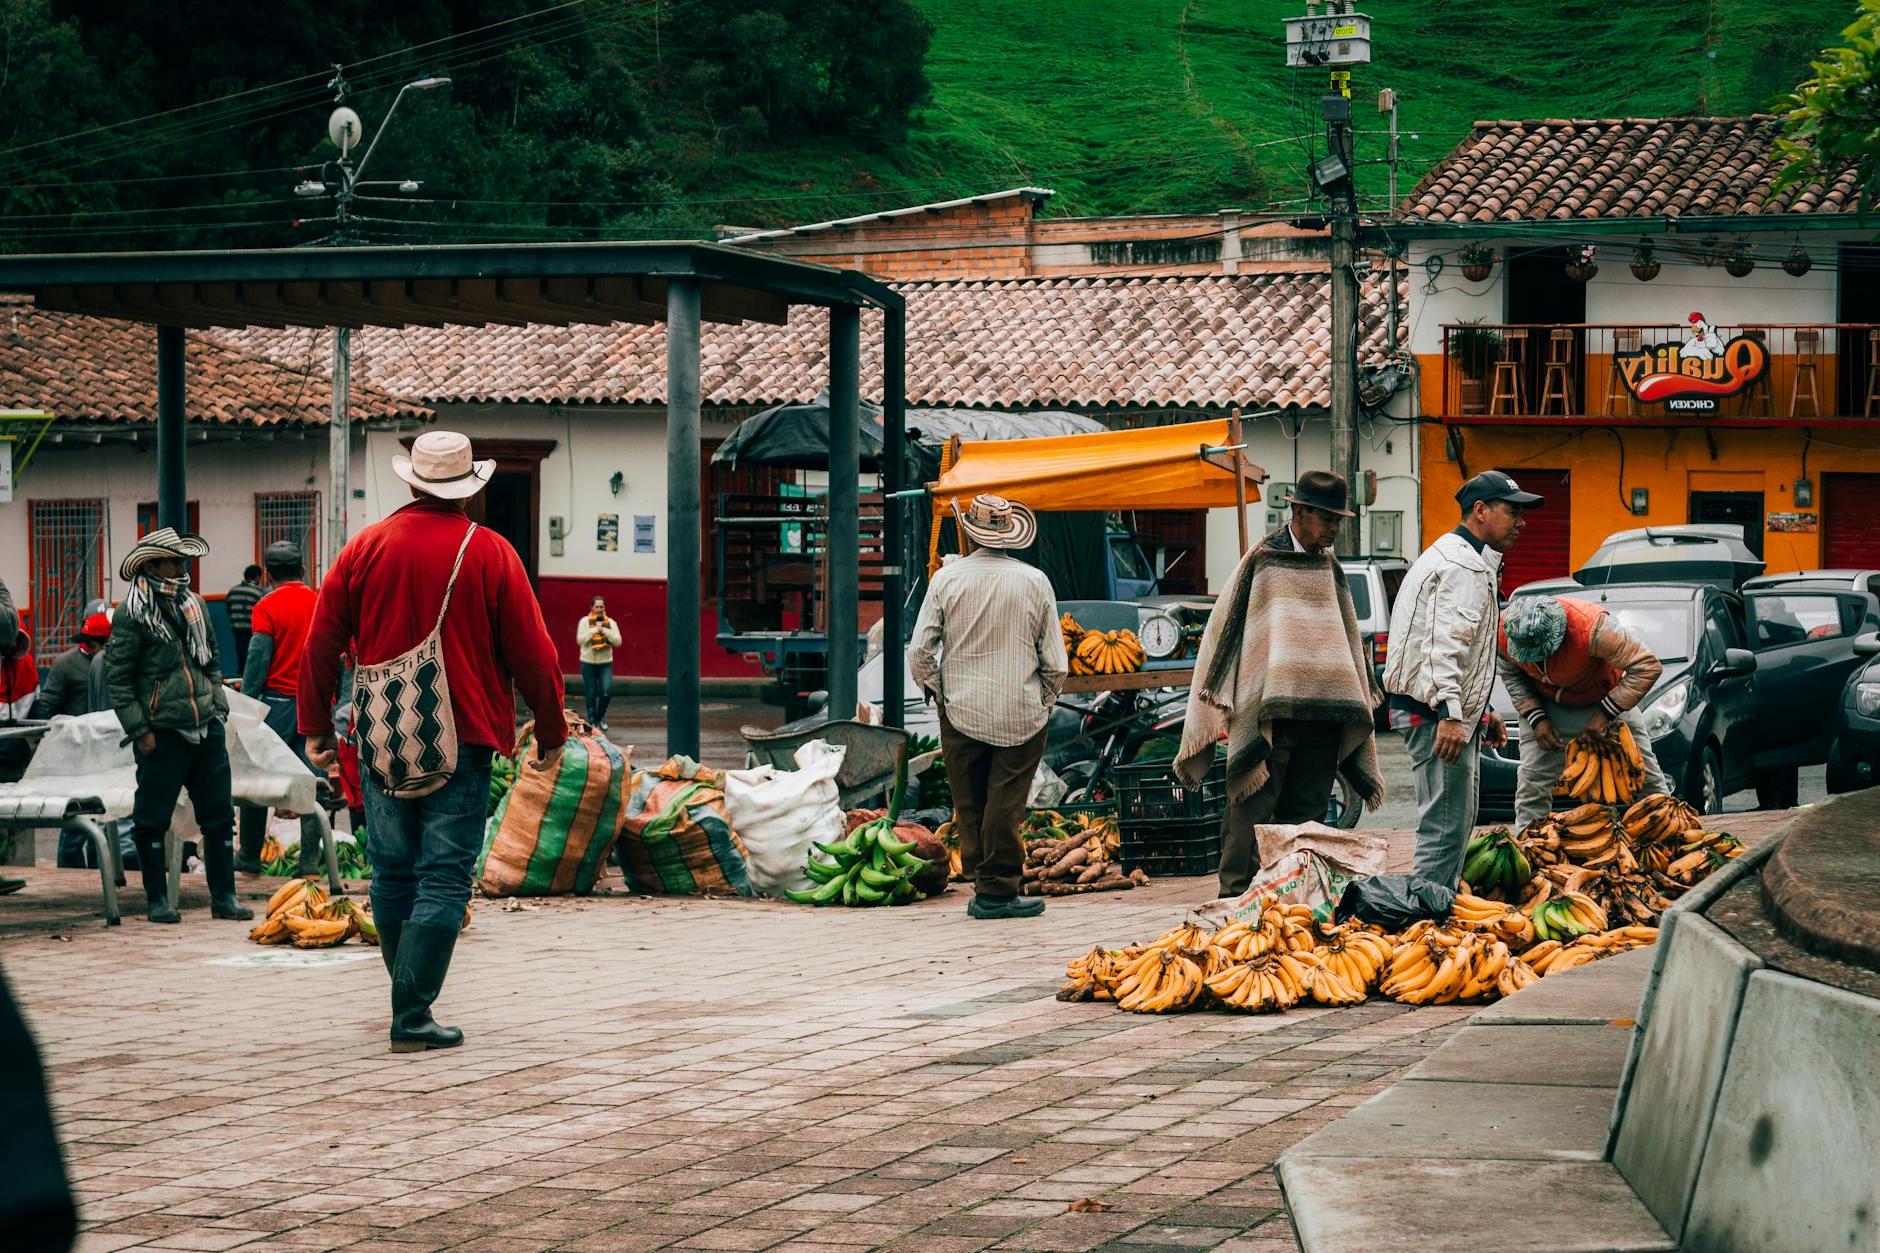 People on City Street, Antioquia, Columbia